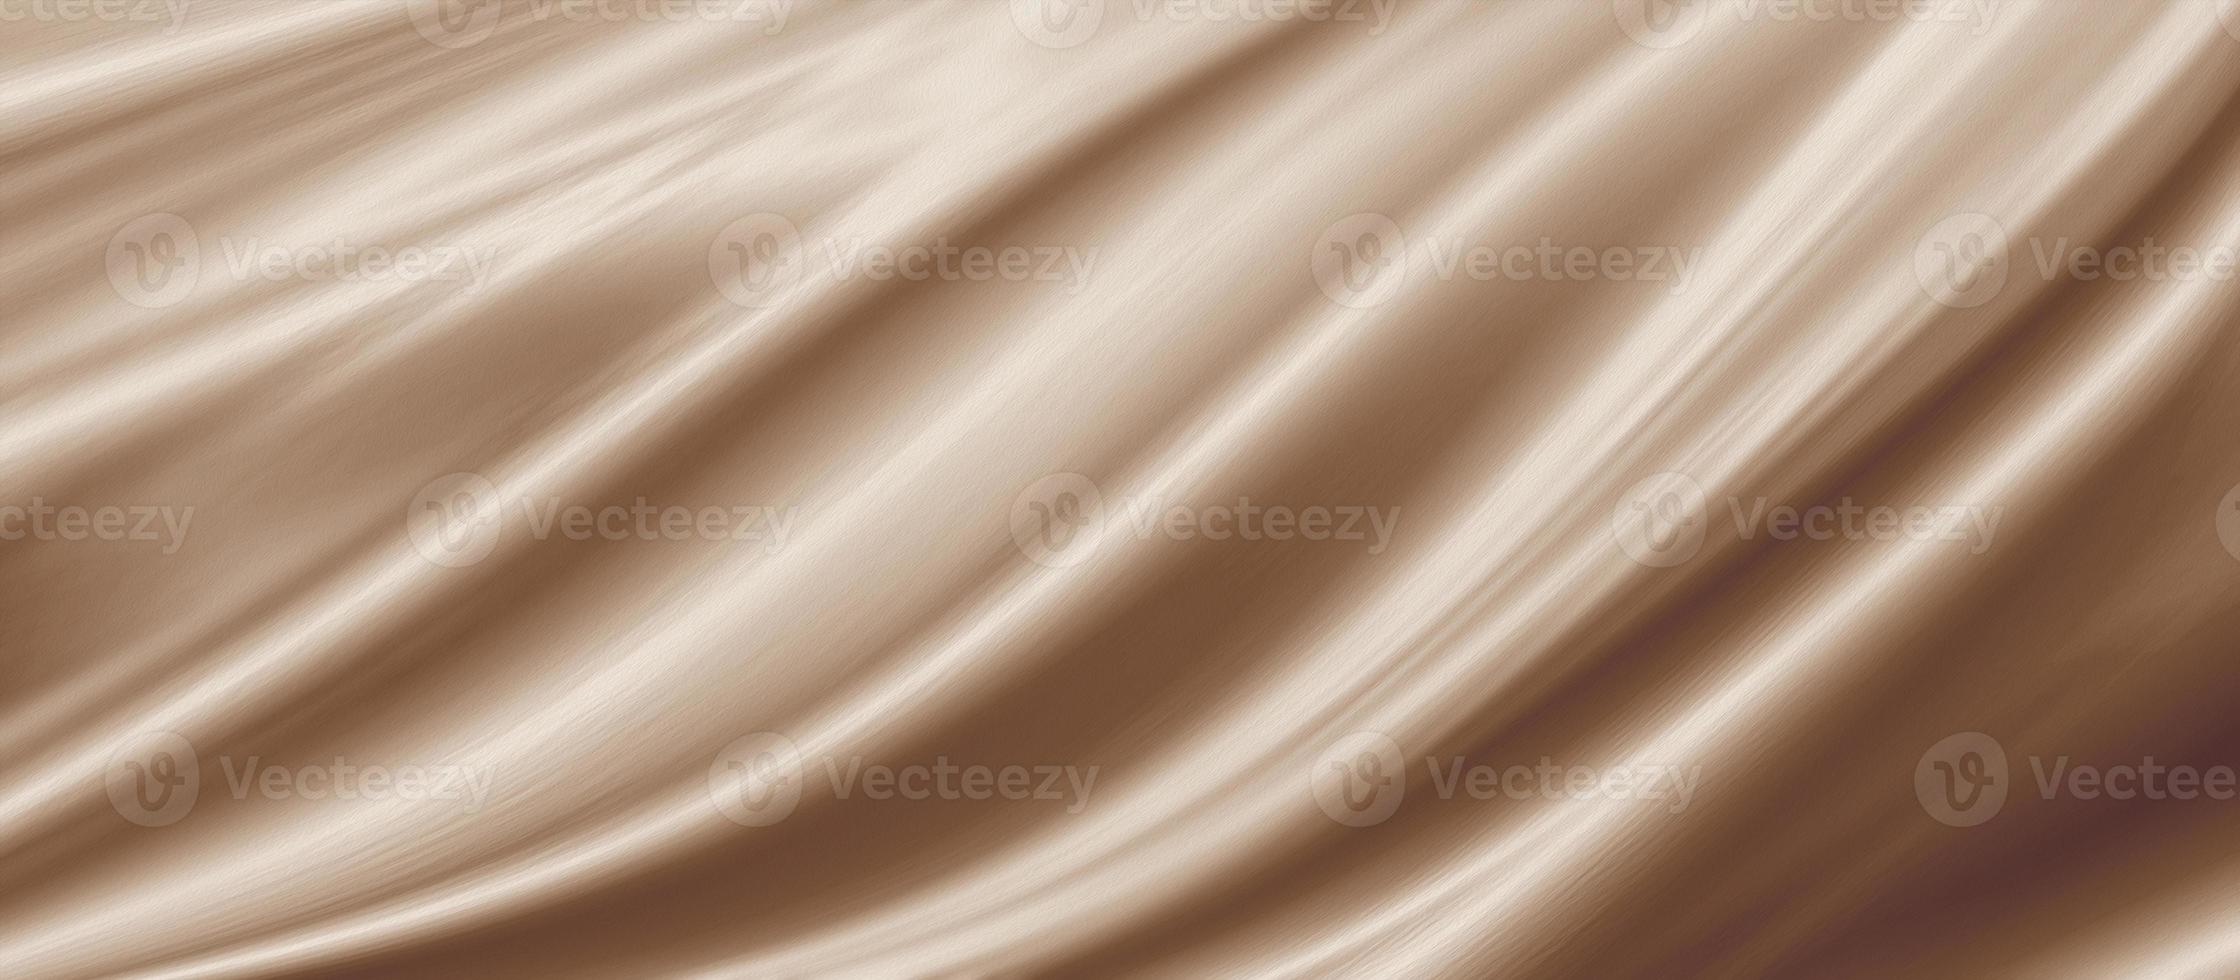 guldbrunt tyg textur bakgrund 3d illustration foto